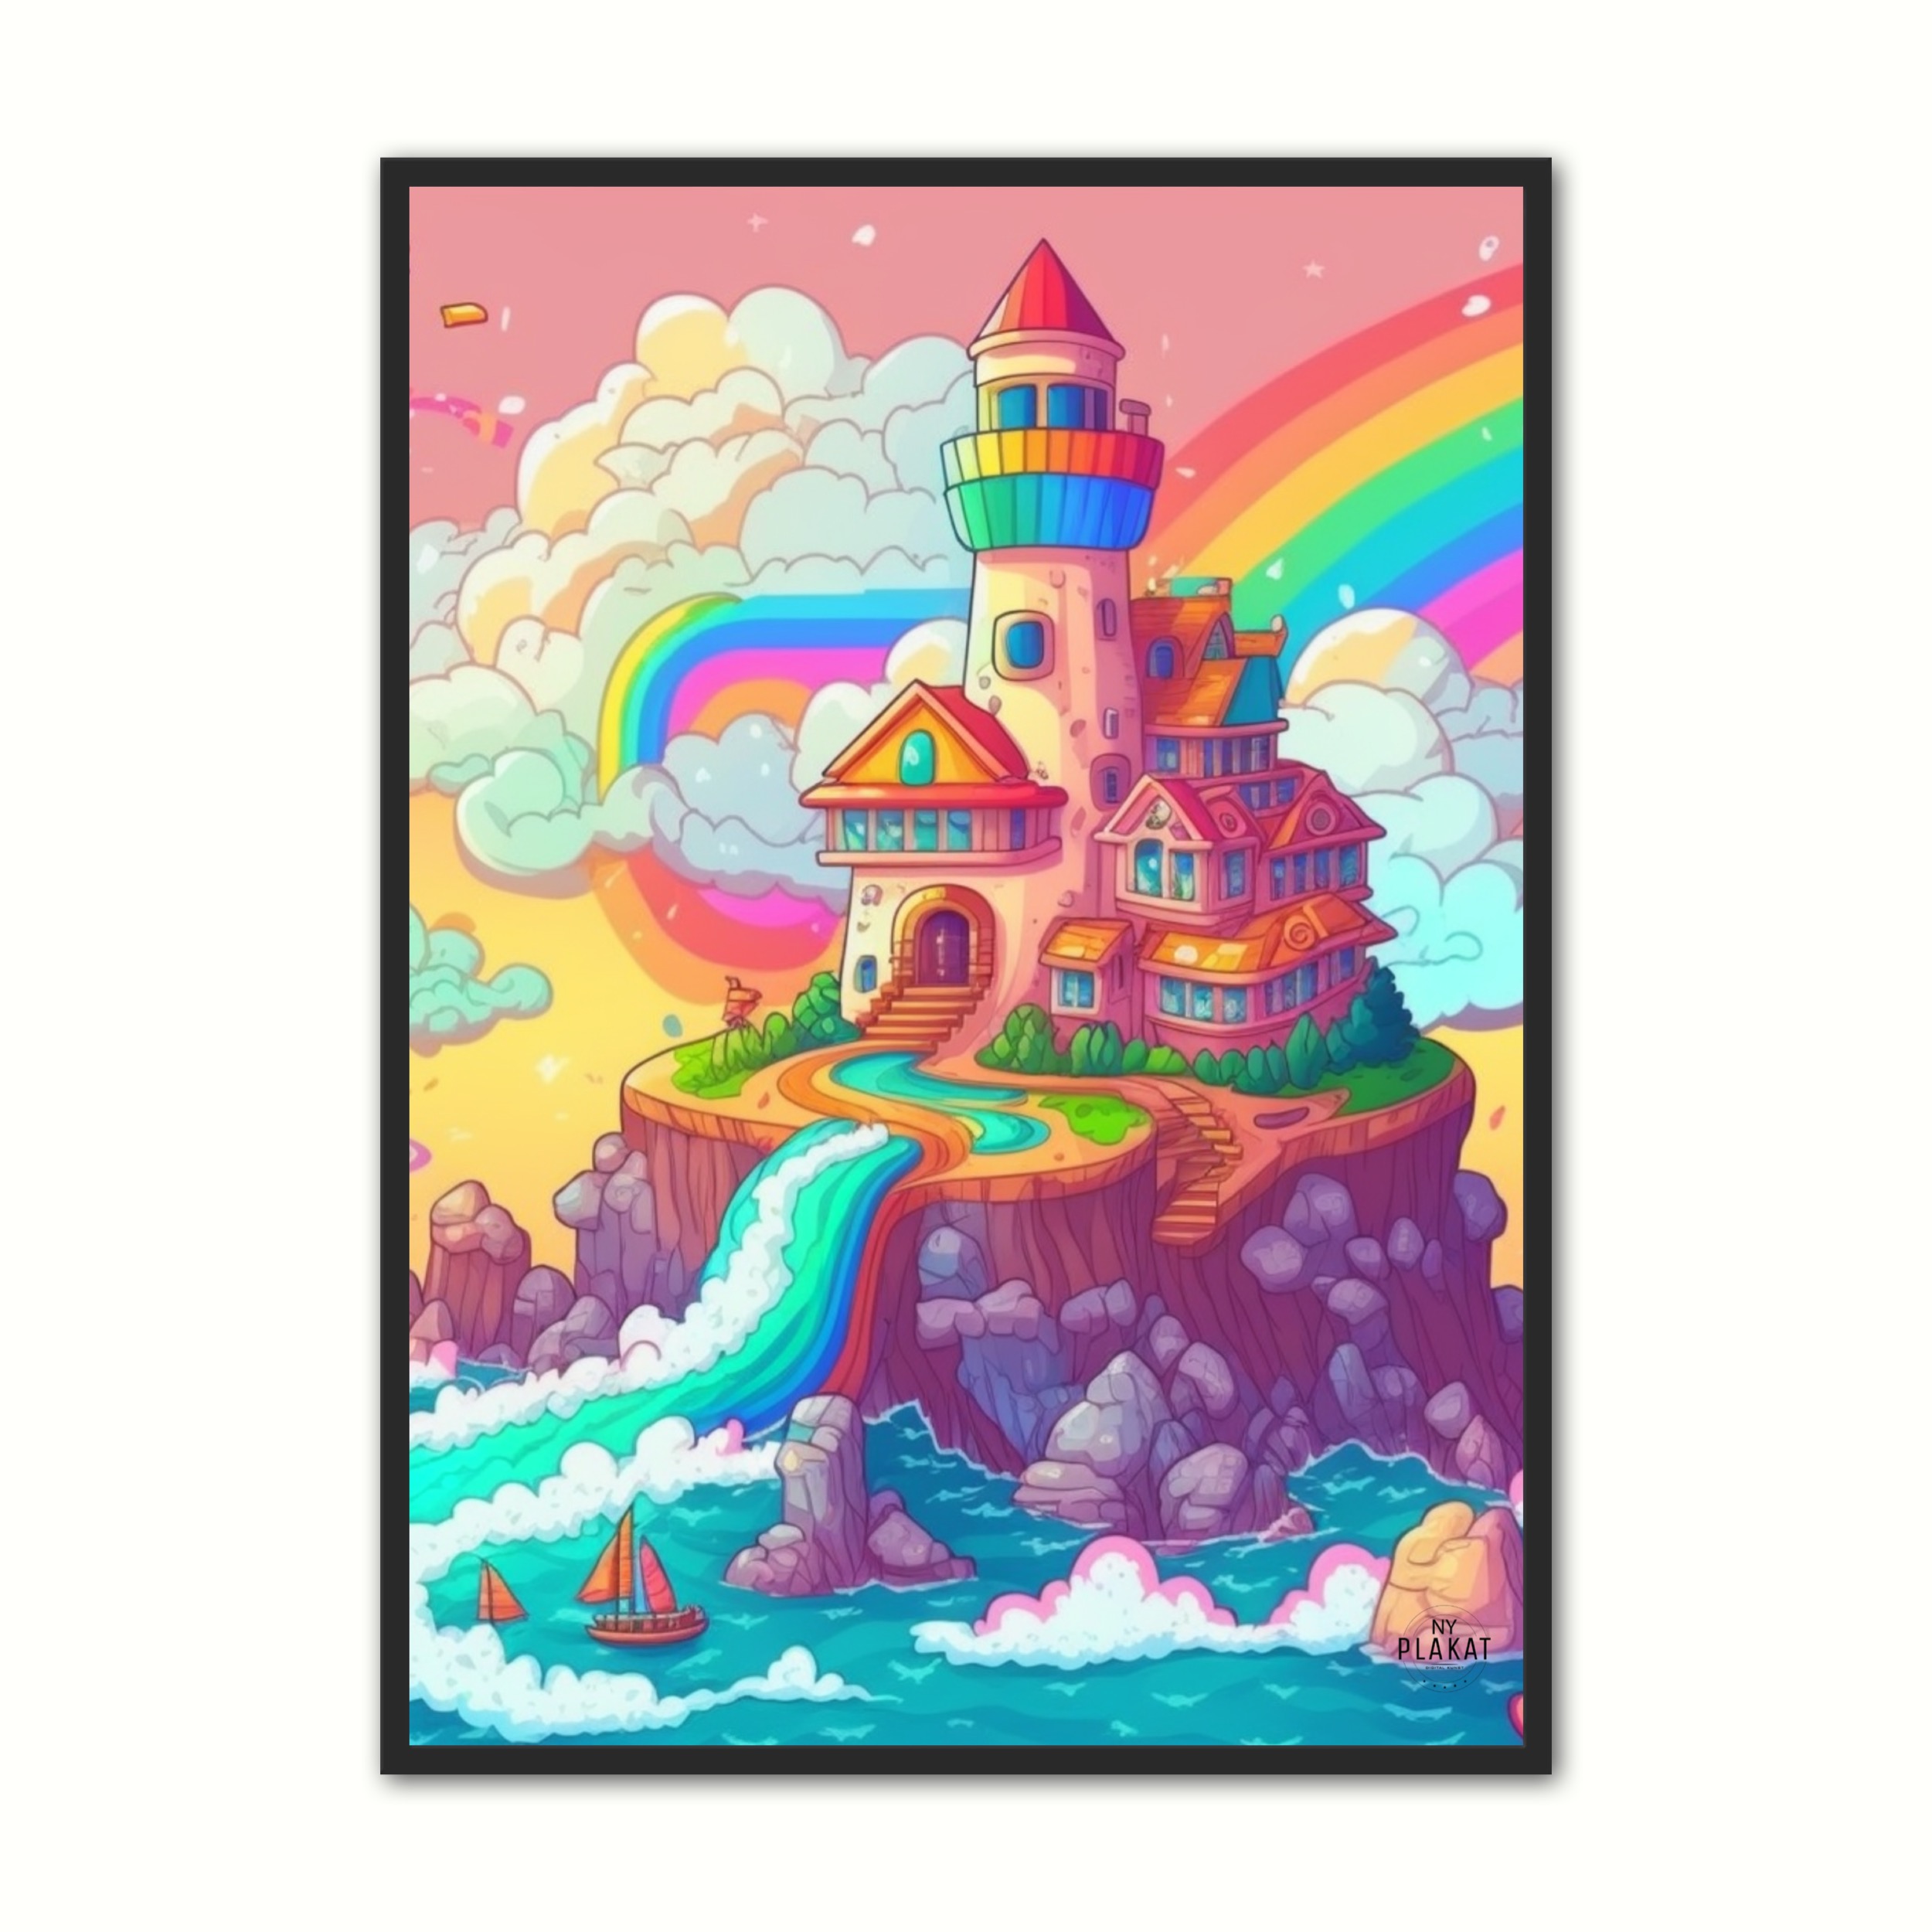 Billede af Plakat med Tiny Rainbow Island No. 4 21 x 29,7 cm (A4)